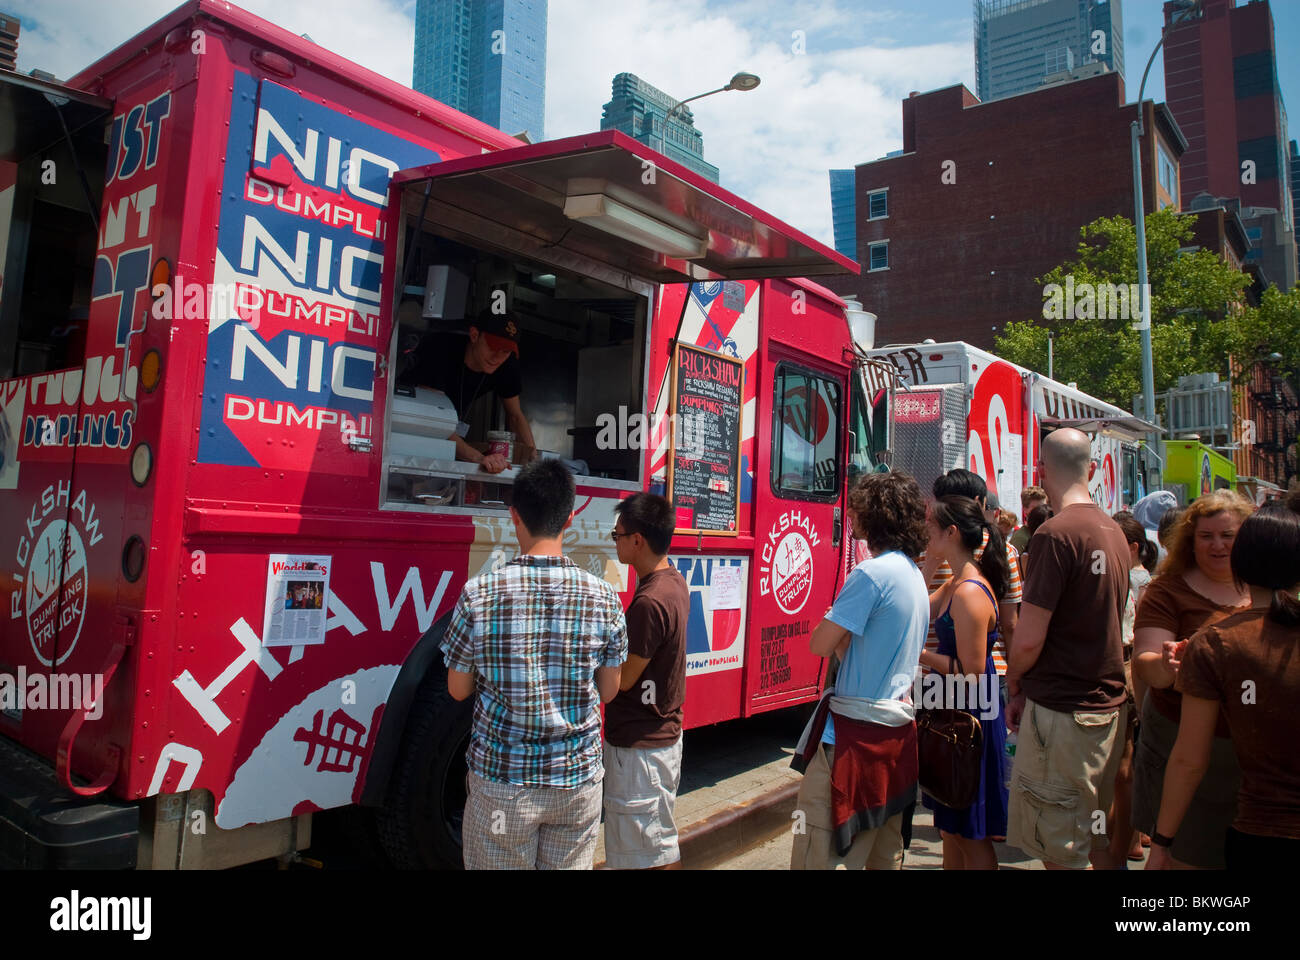 The Rickshaw Dumpling Truck is seen at the Hell's Kitchen Flea Market in New York Stock Photo